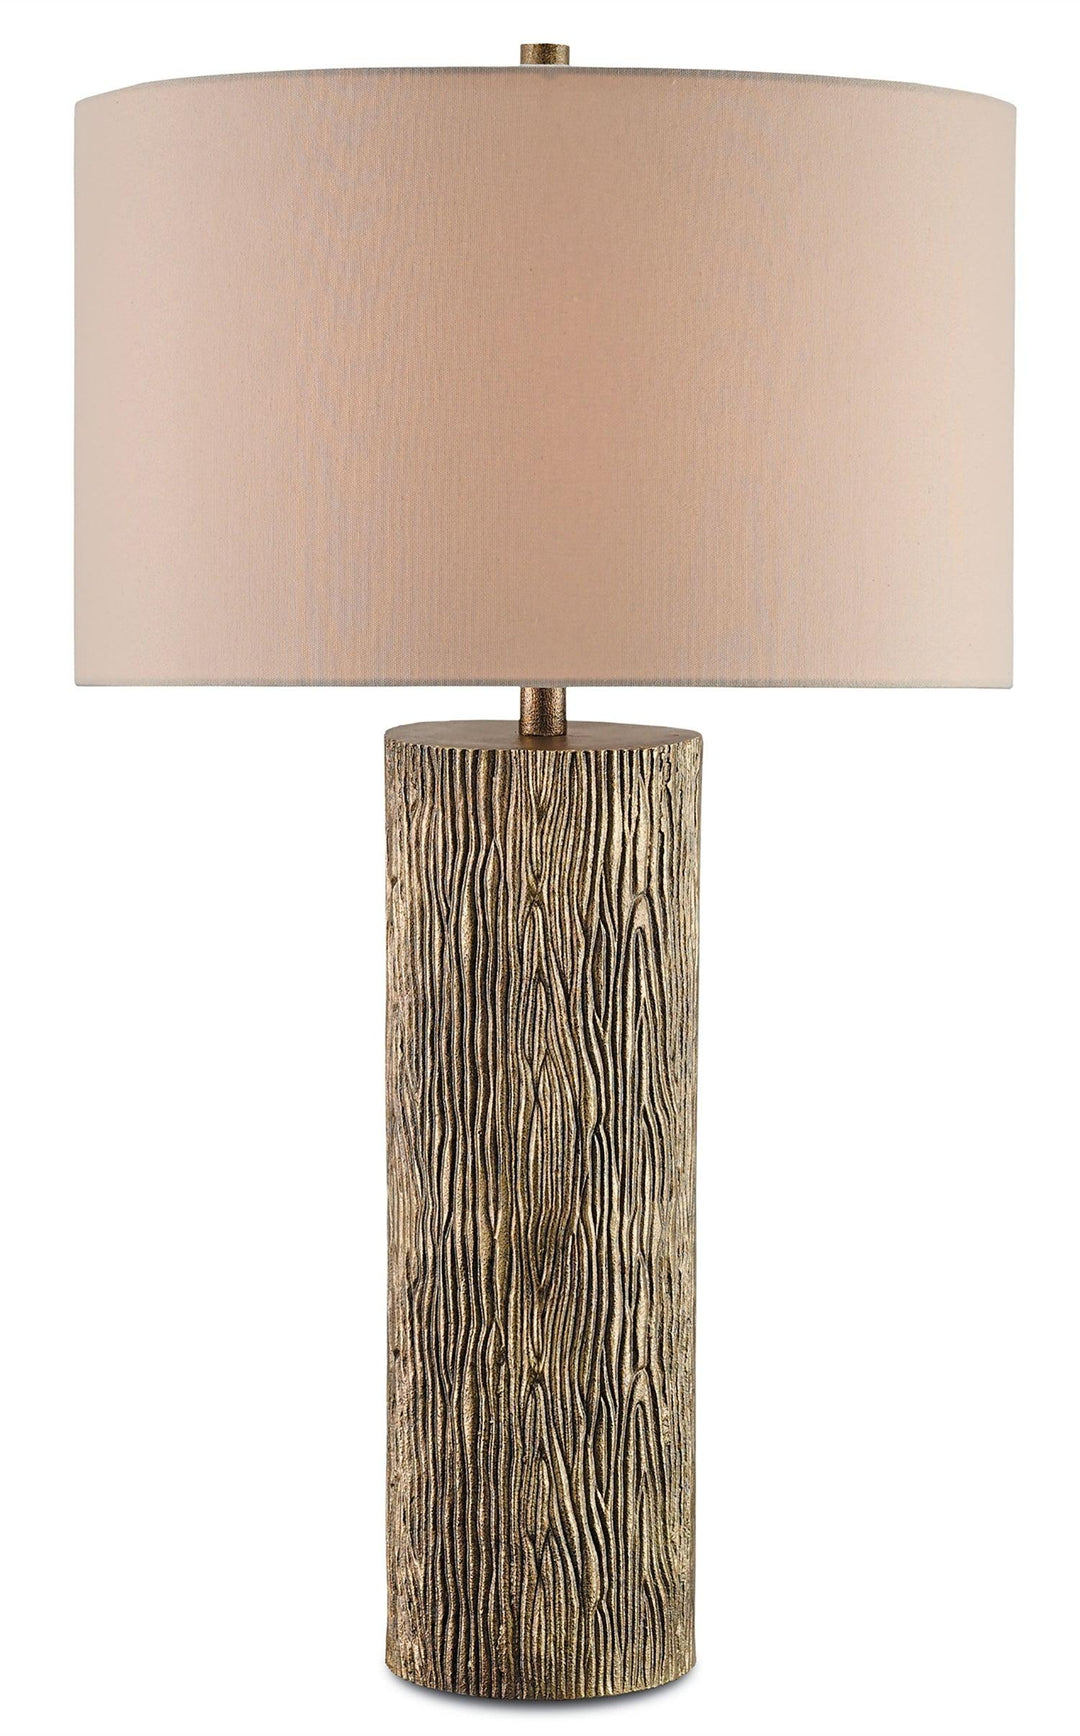 Landseer Table Lamp - Casey & Company